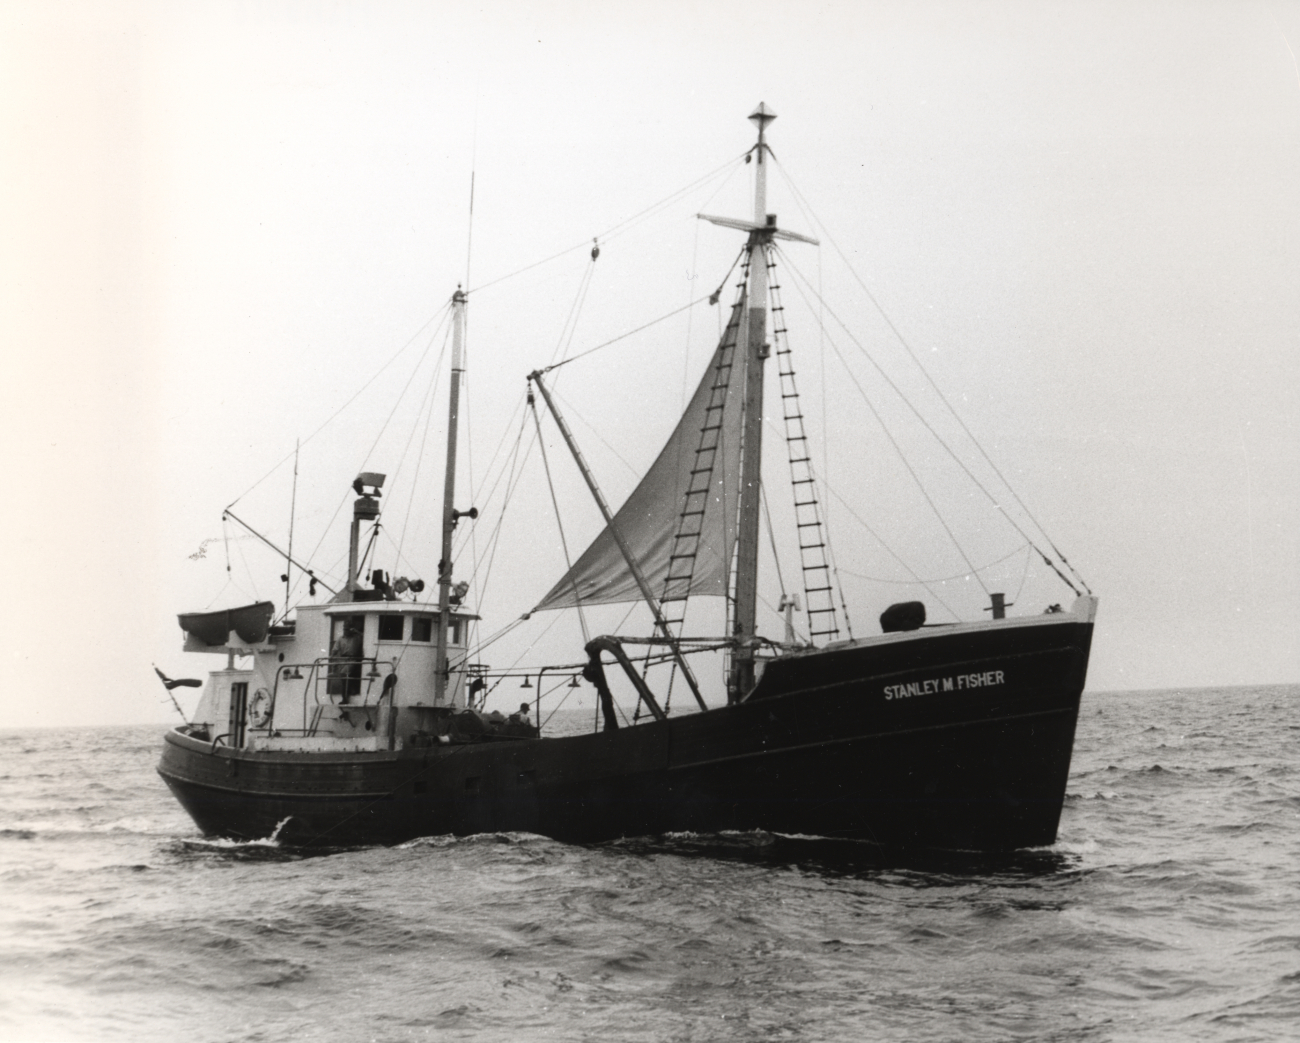 The sea scallop fishing vessel STANLEY M